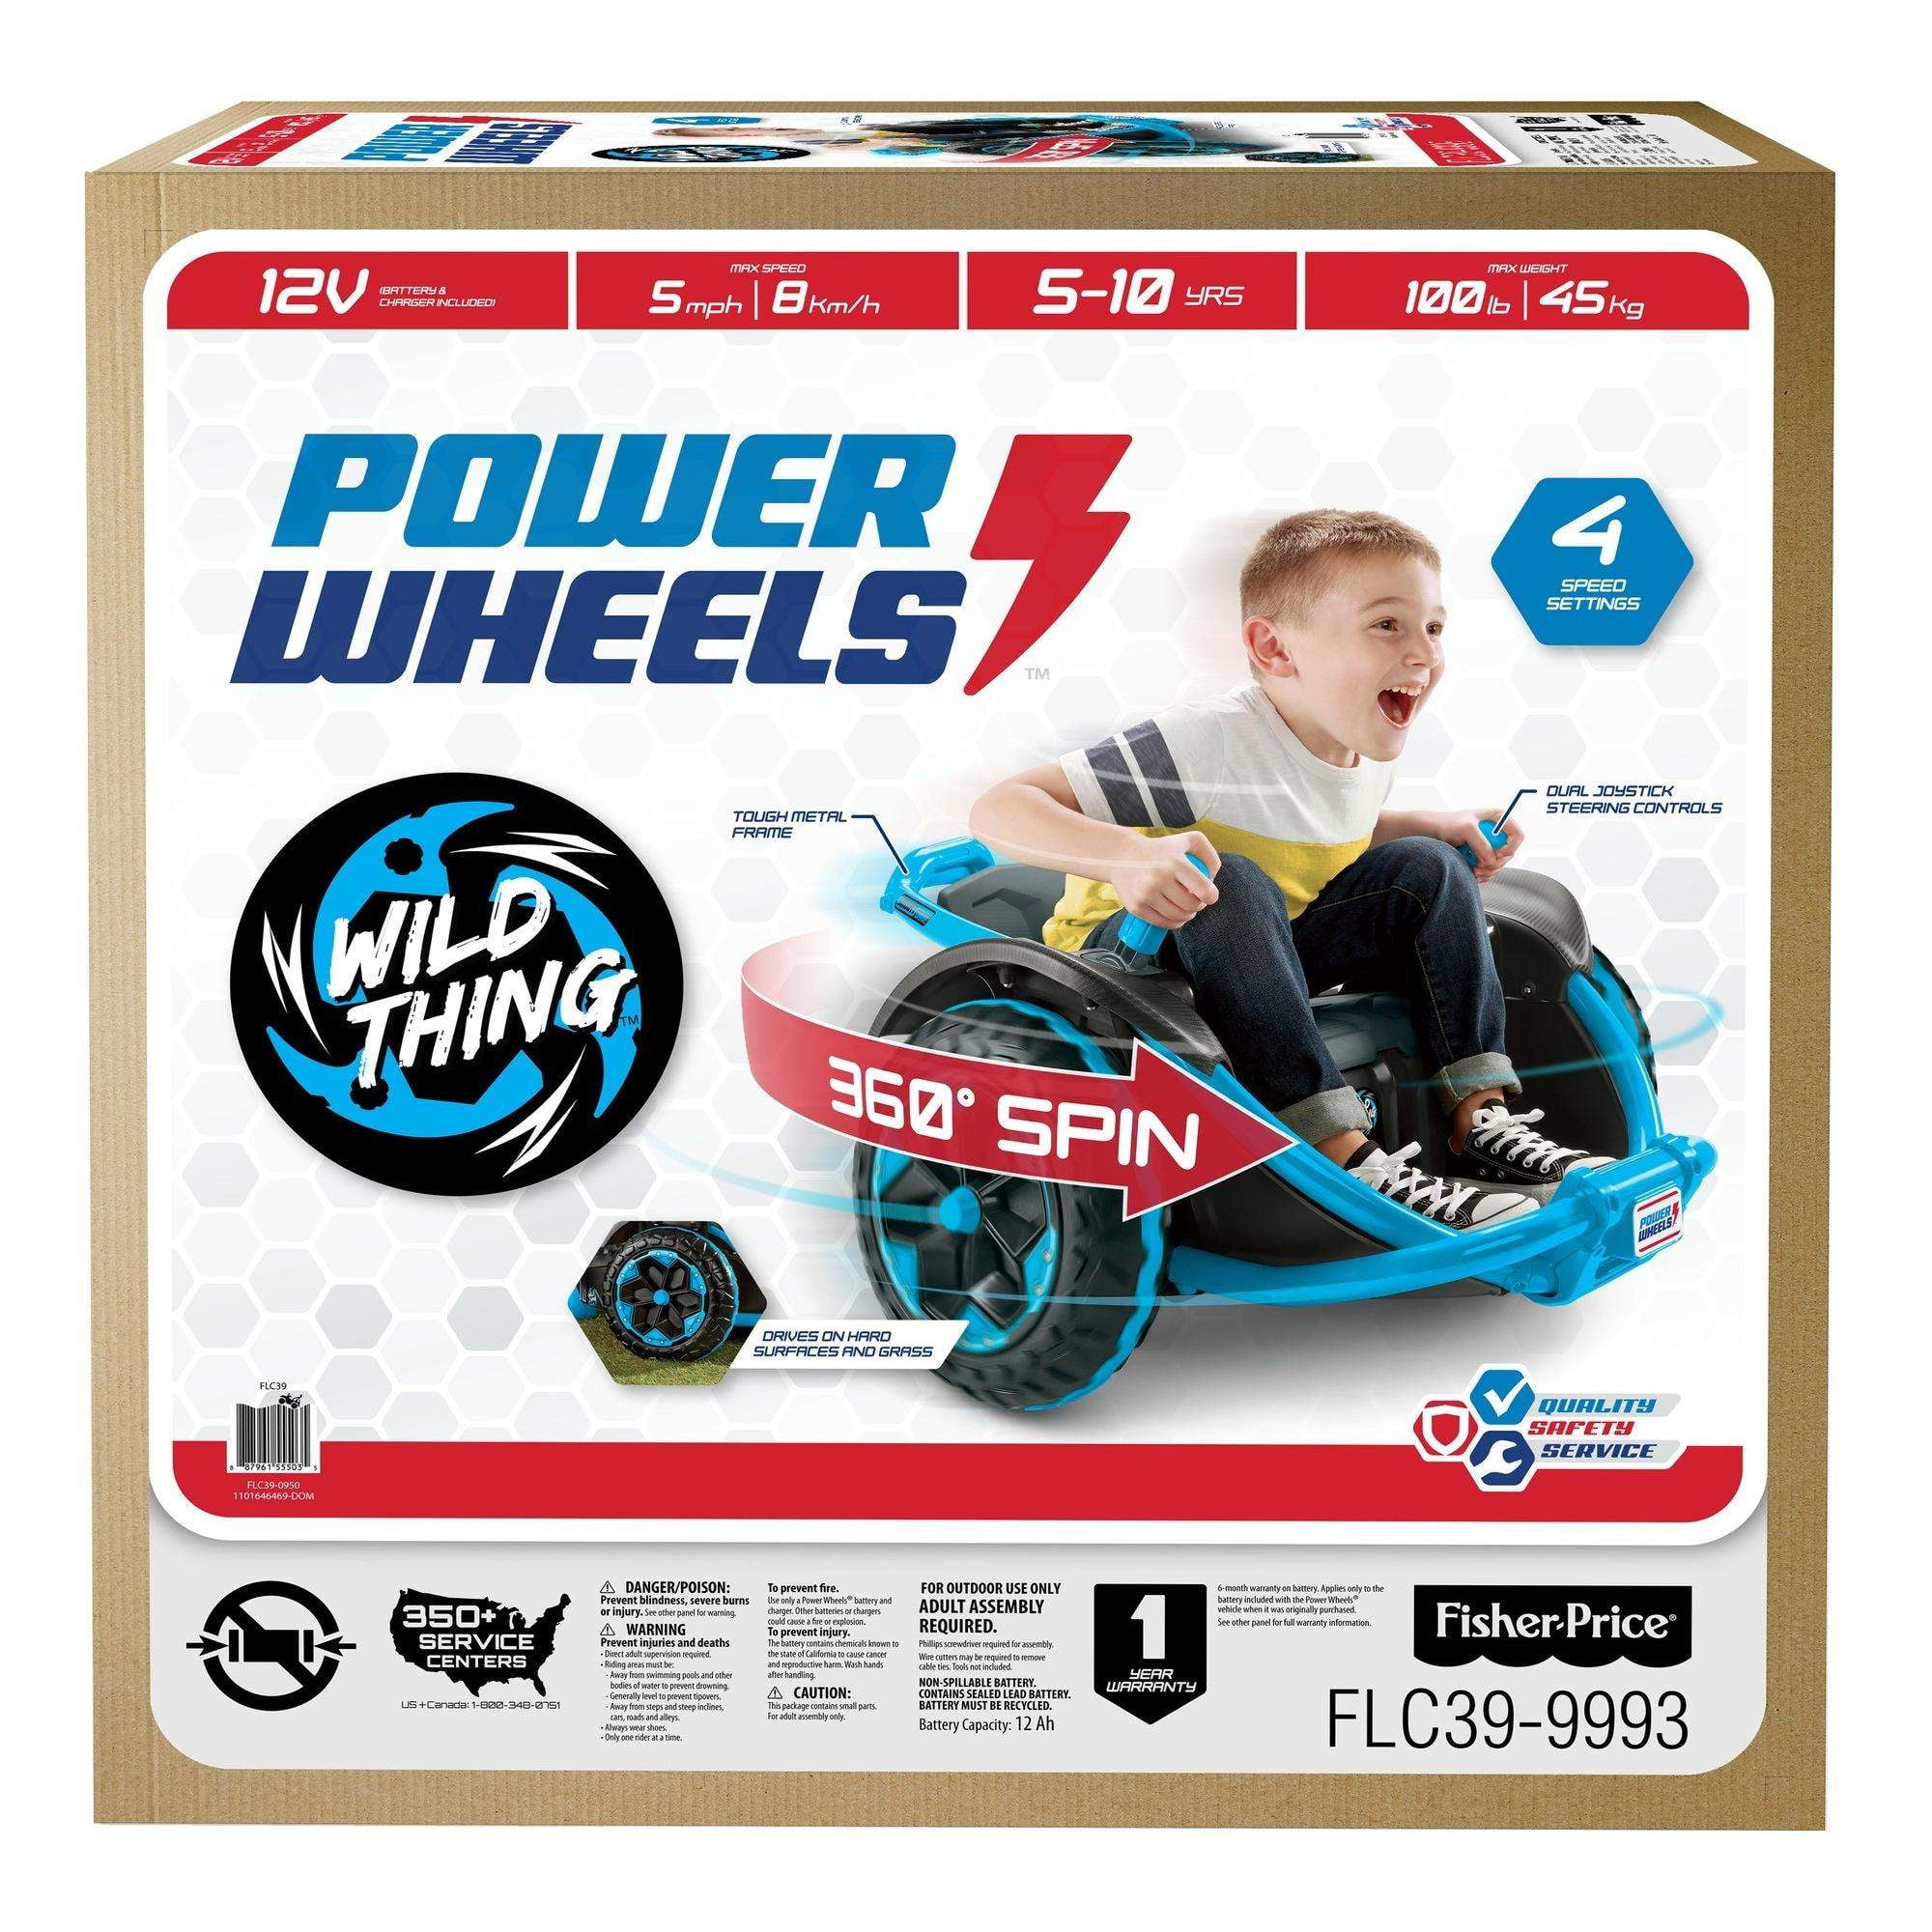 Power Wheels Wild Thing 360 Spinning 